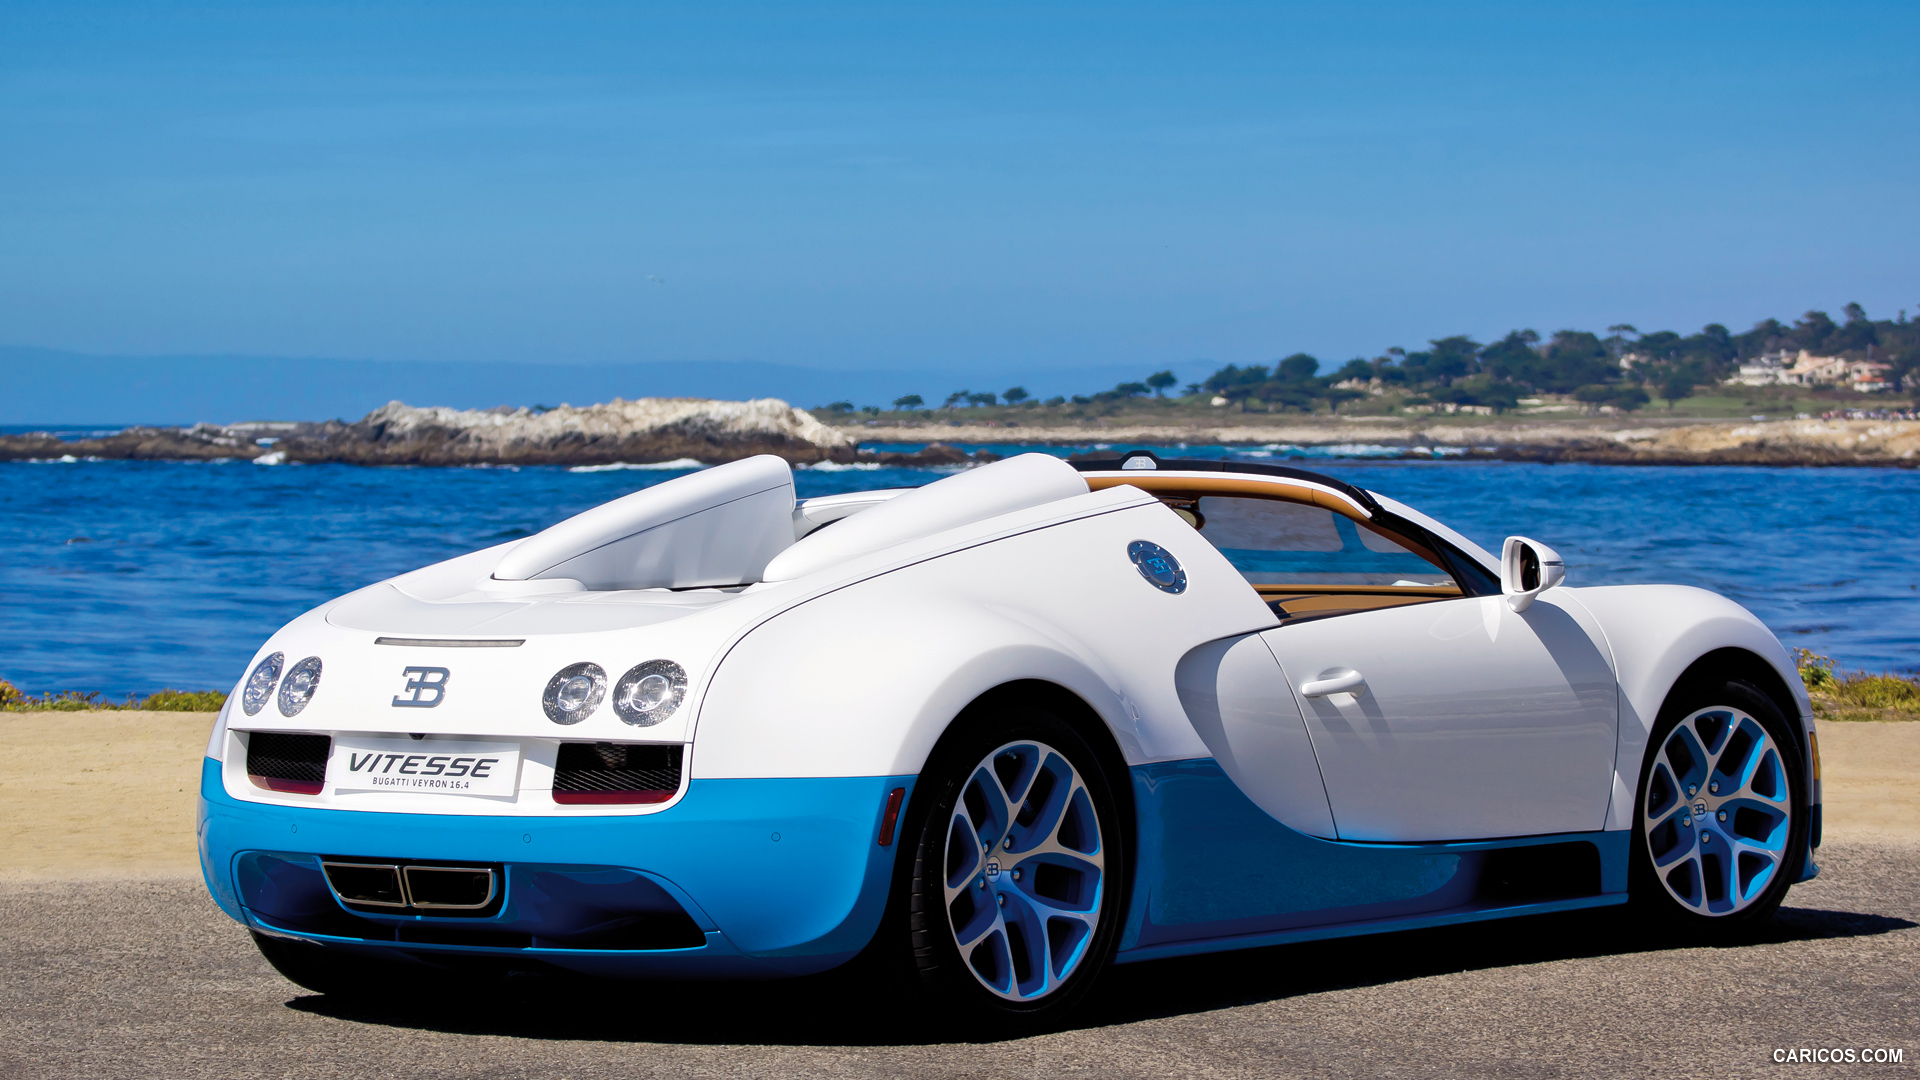 Bugatti Veyron 16.4 Grand Sport Backgrounds, Compatible - PC, Mobile, Gadgets| 1920x1080 px